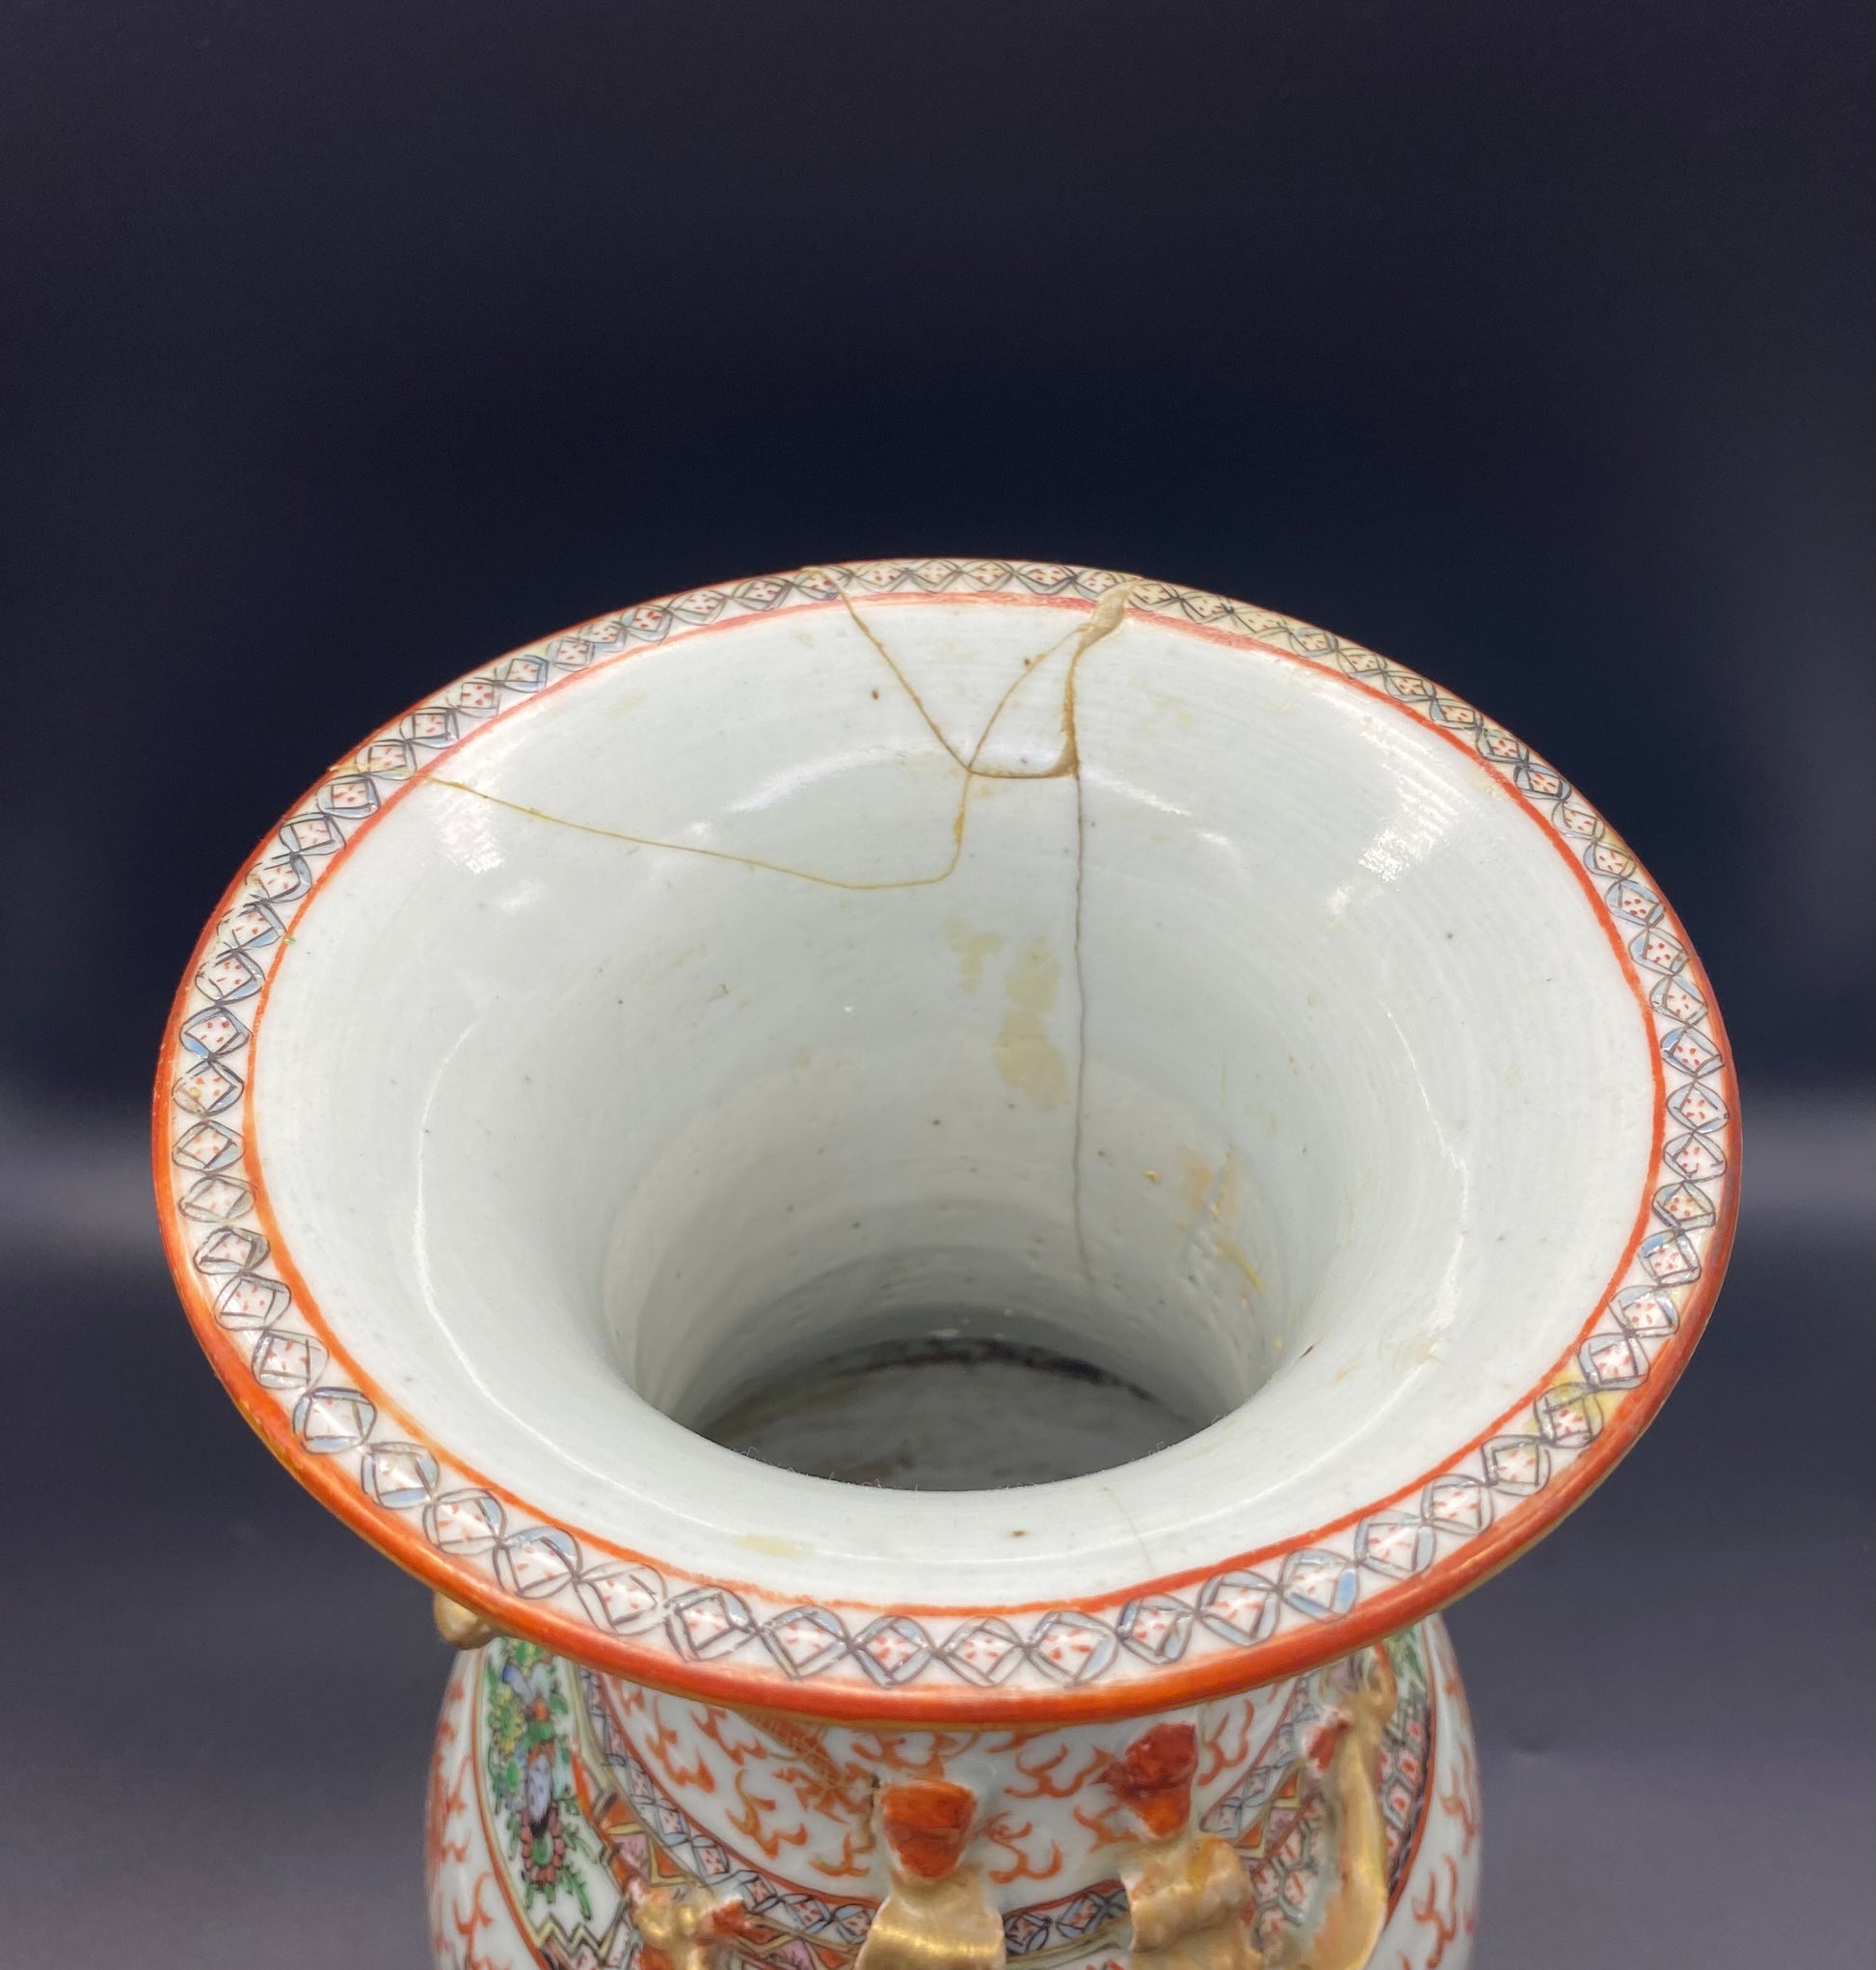 KB ANTIQUES Chinese dragon vase for sale Republic period porcelain 